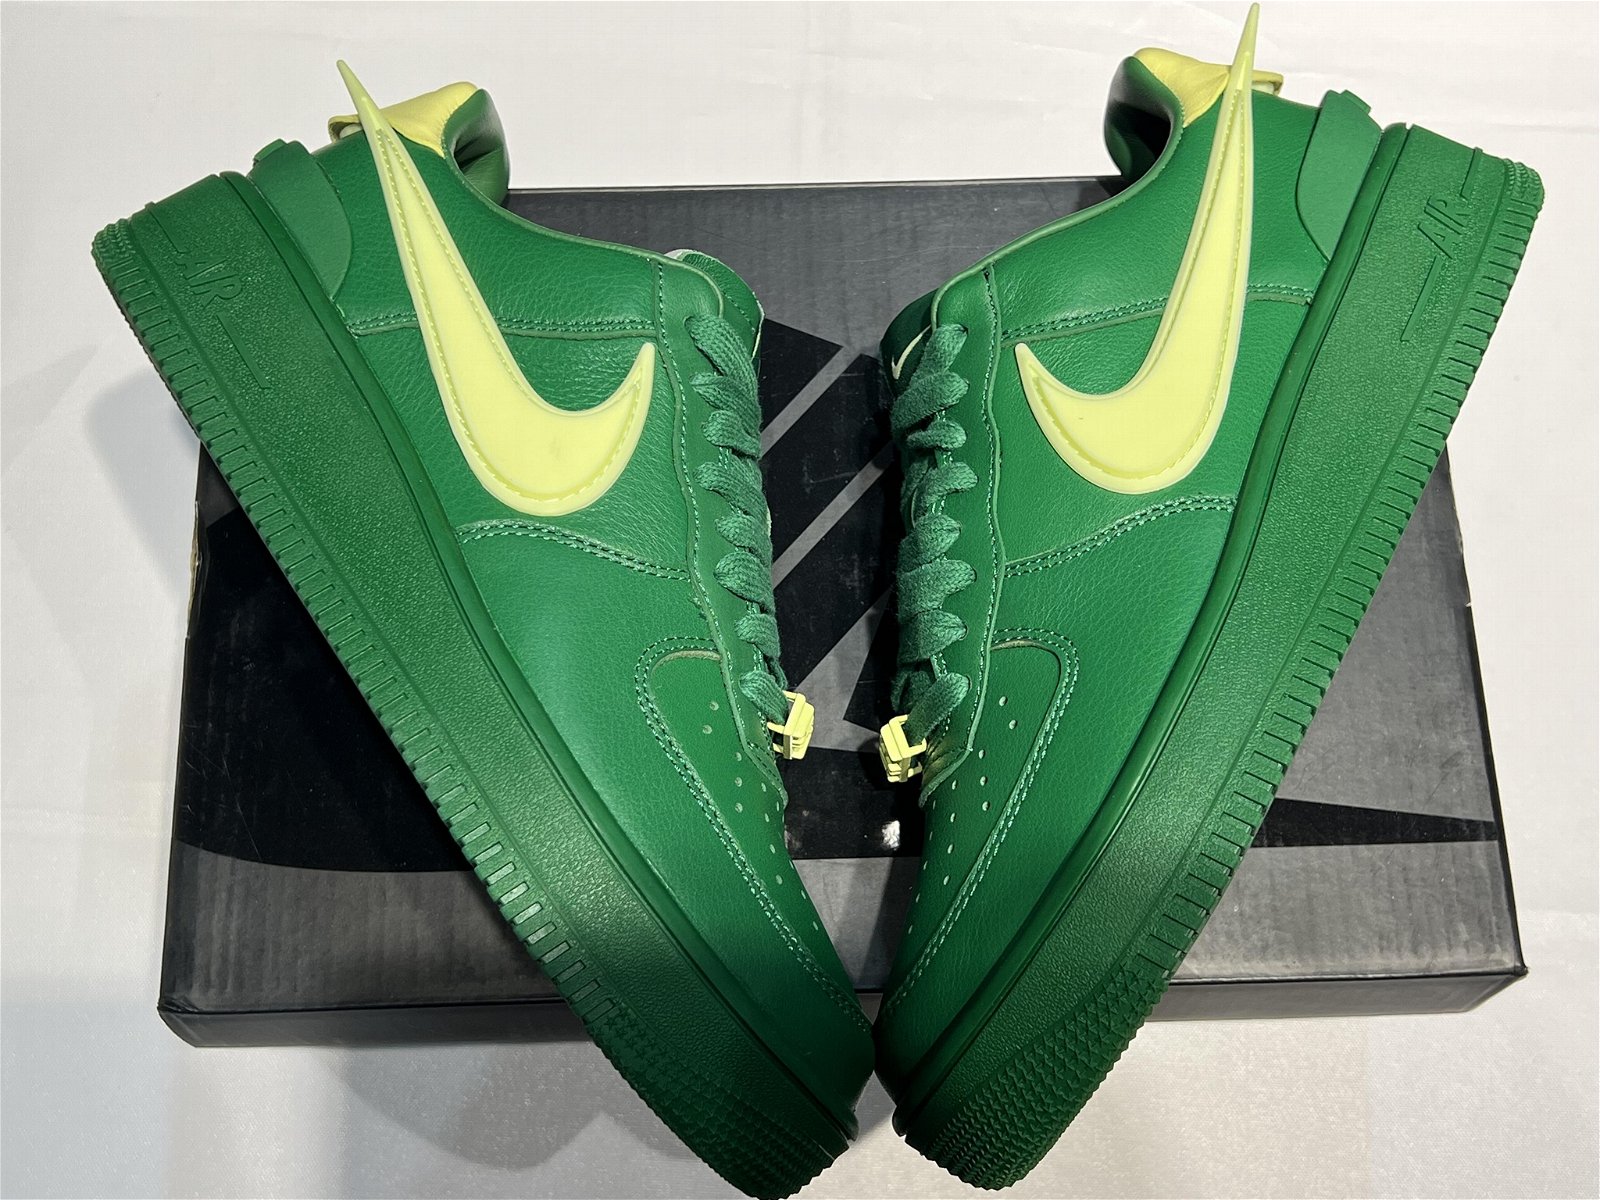 AMBUSH x Air Force 1 Low “Green sport shoes (China Trading Company ...